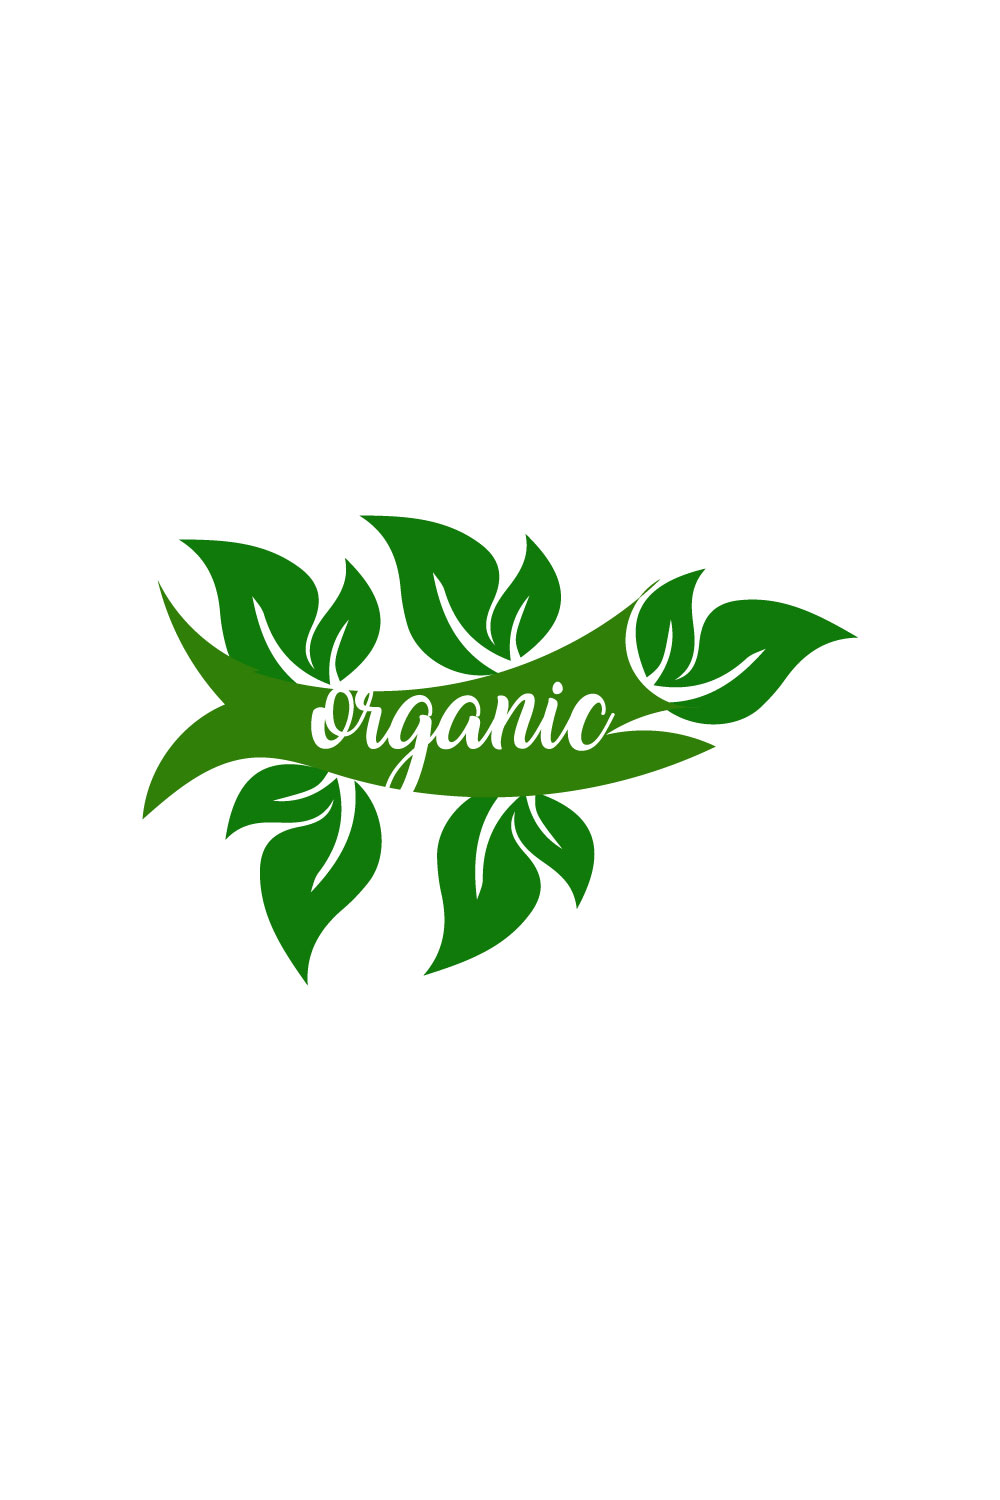 Free organic label logo pinterest preview image.